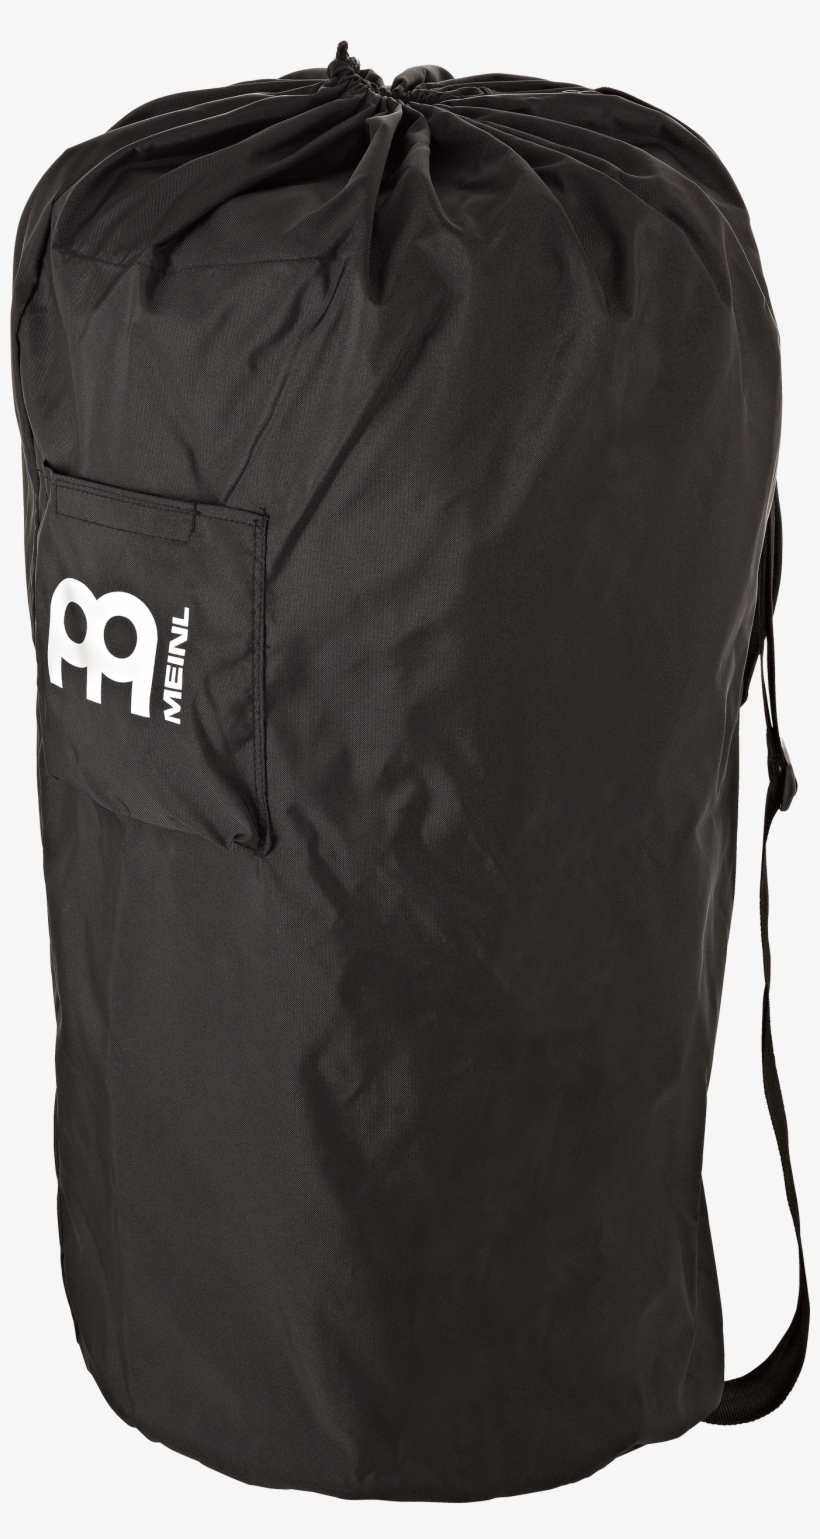 Conga Gig Bag - Meinl Conga Gig Bag Fits All Sizes, transparent png #1112132